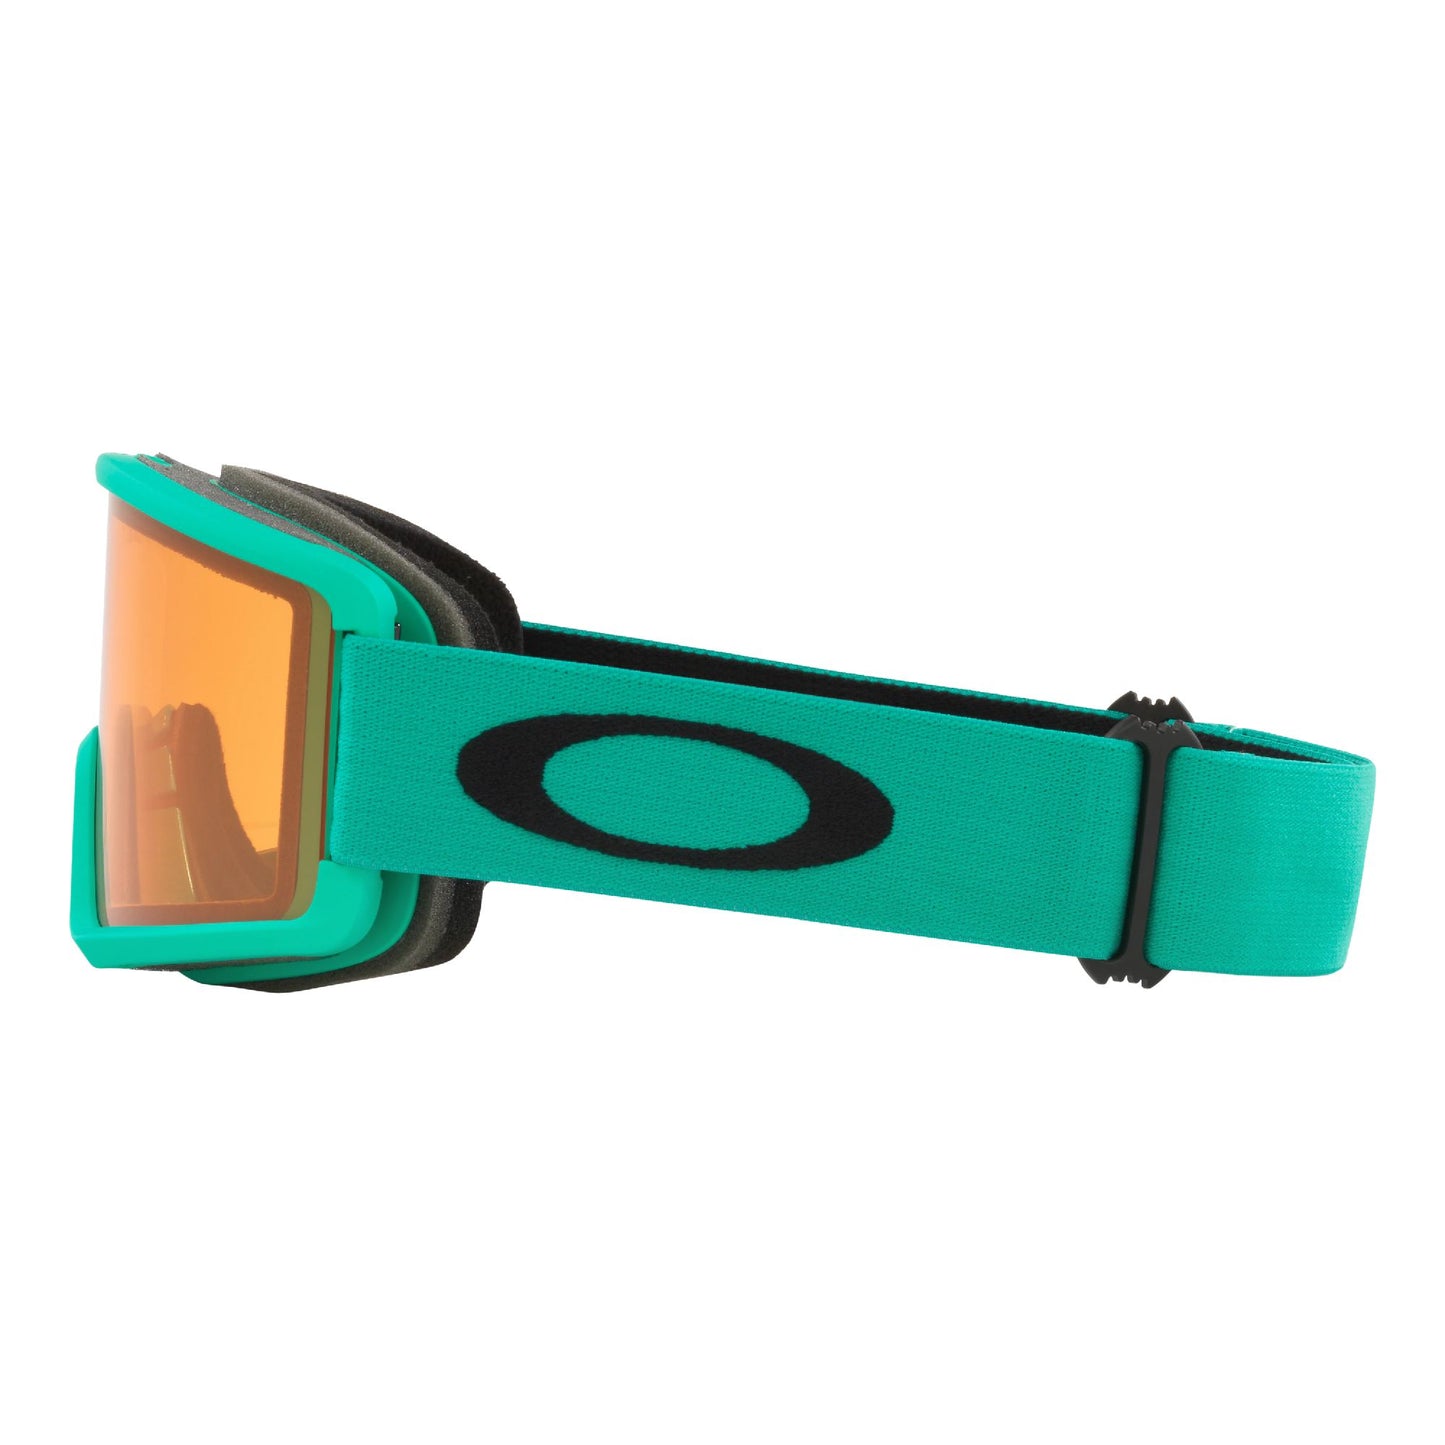 Oakley Target Line M Snow Goggles Celeste / Persimmon Snow Goggles